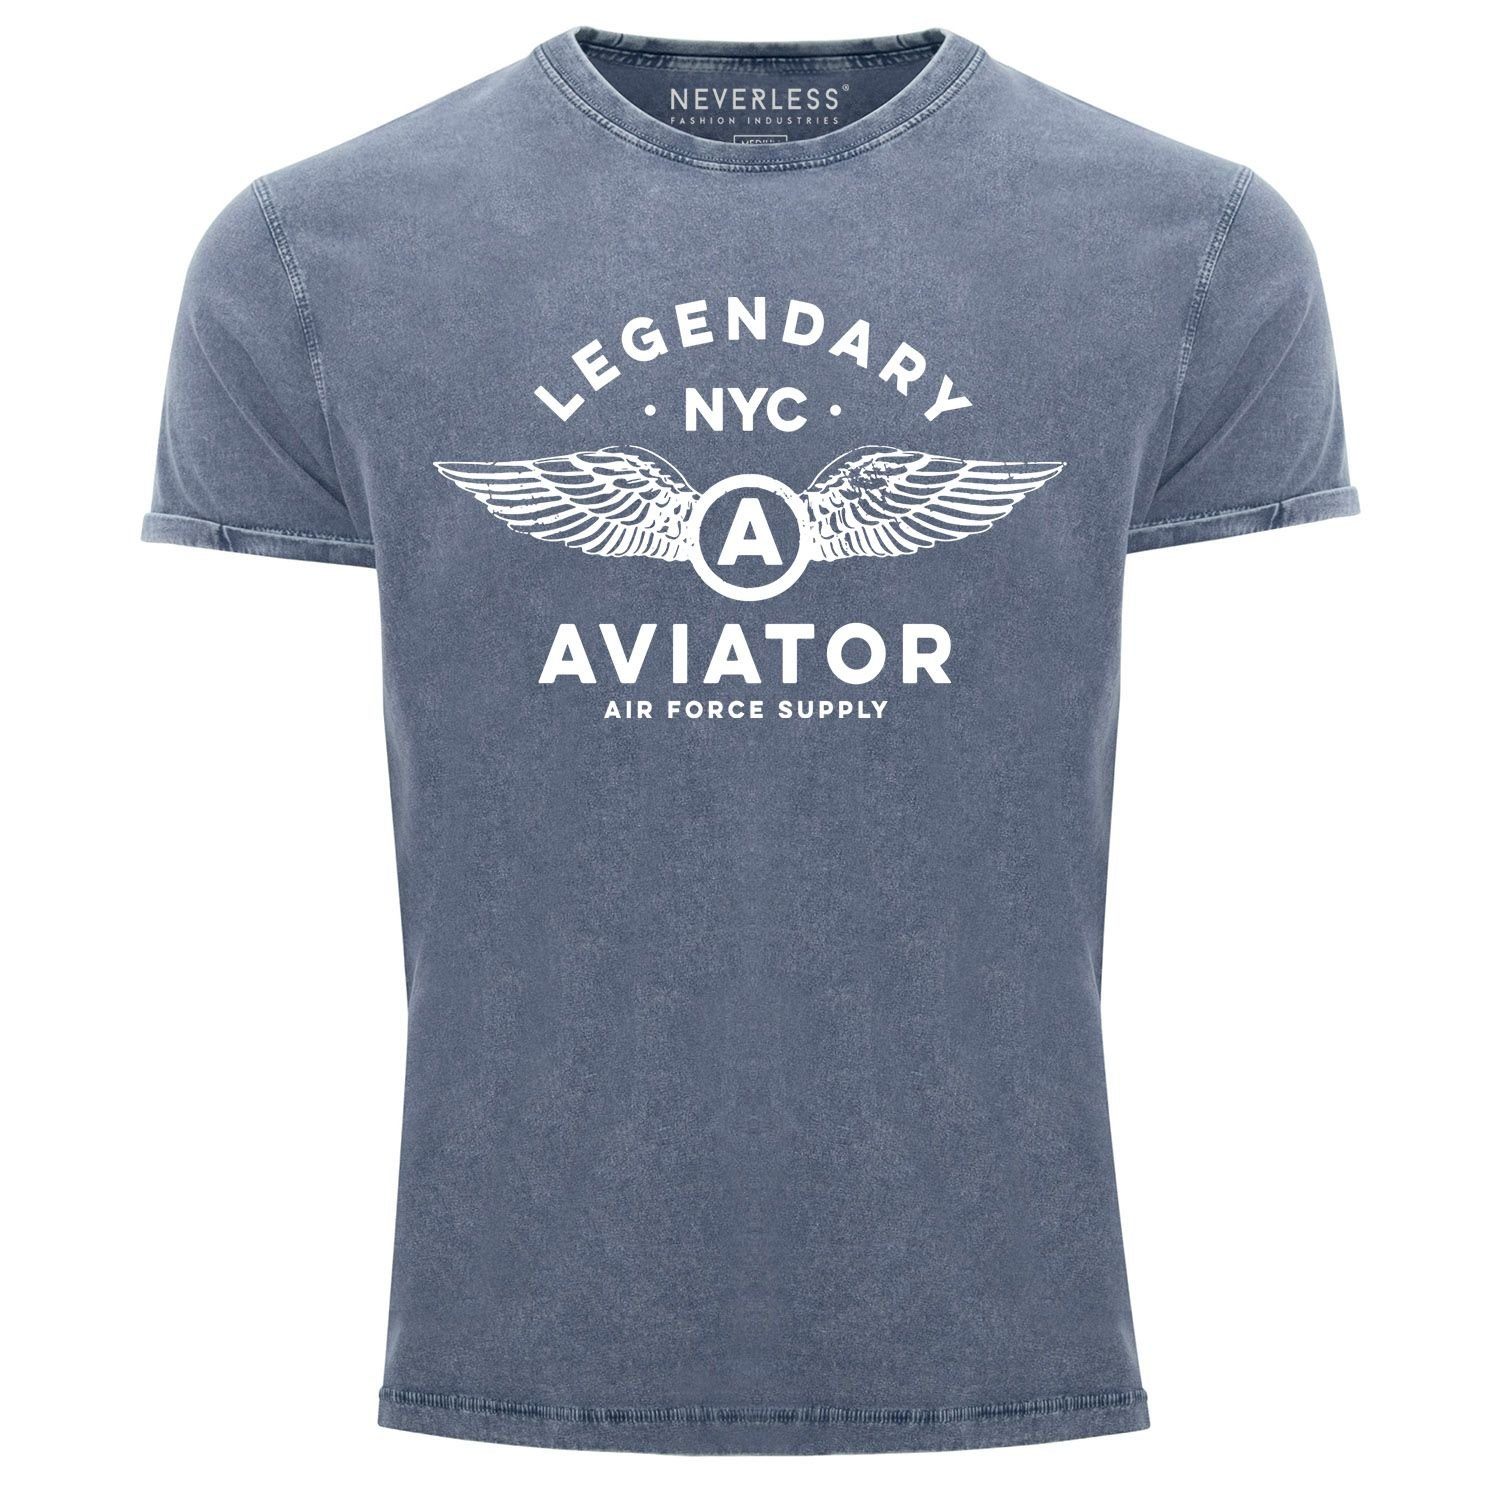 Neverless Print-Shirt Herren Vintage Printshirt Luftwaffe blau NYC Aviator Force Look Neverless® Legendary Print Slim Used Fit Air Shirt Flügel mit